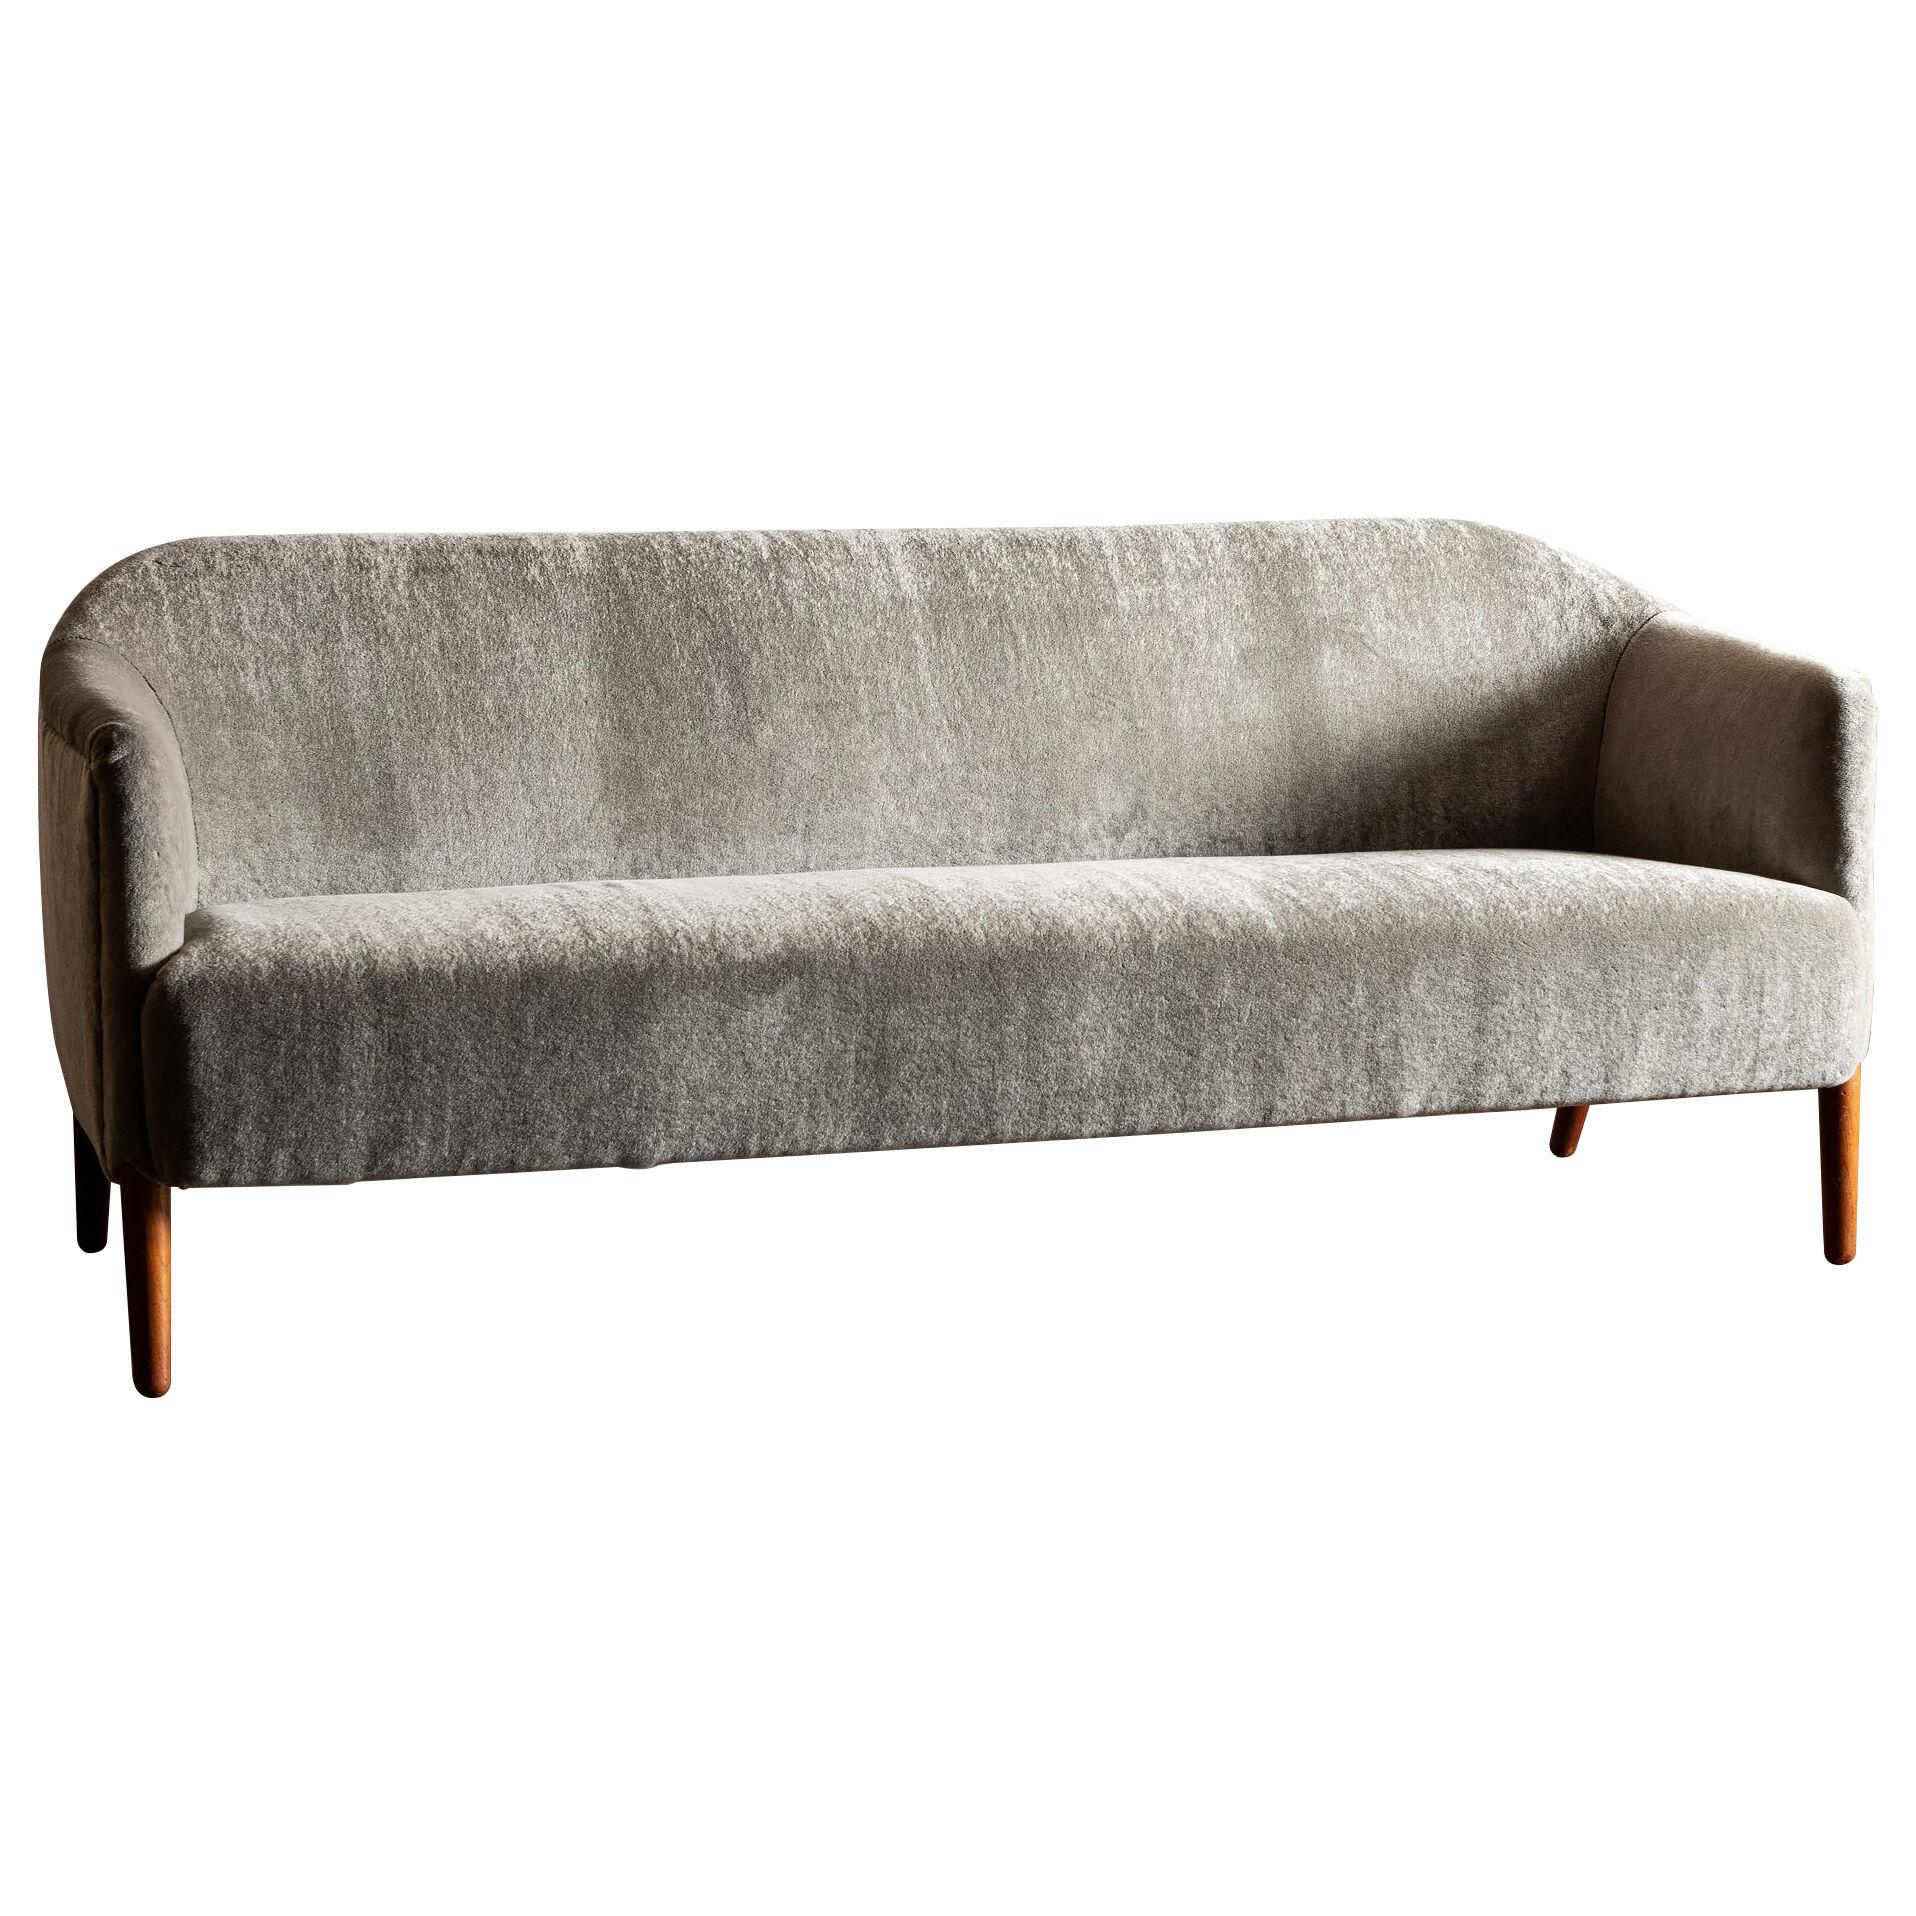 Danish Cabinetmaker's Three Seat Sofa in Grey Mohair Velvet, 1940s